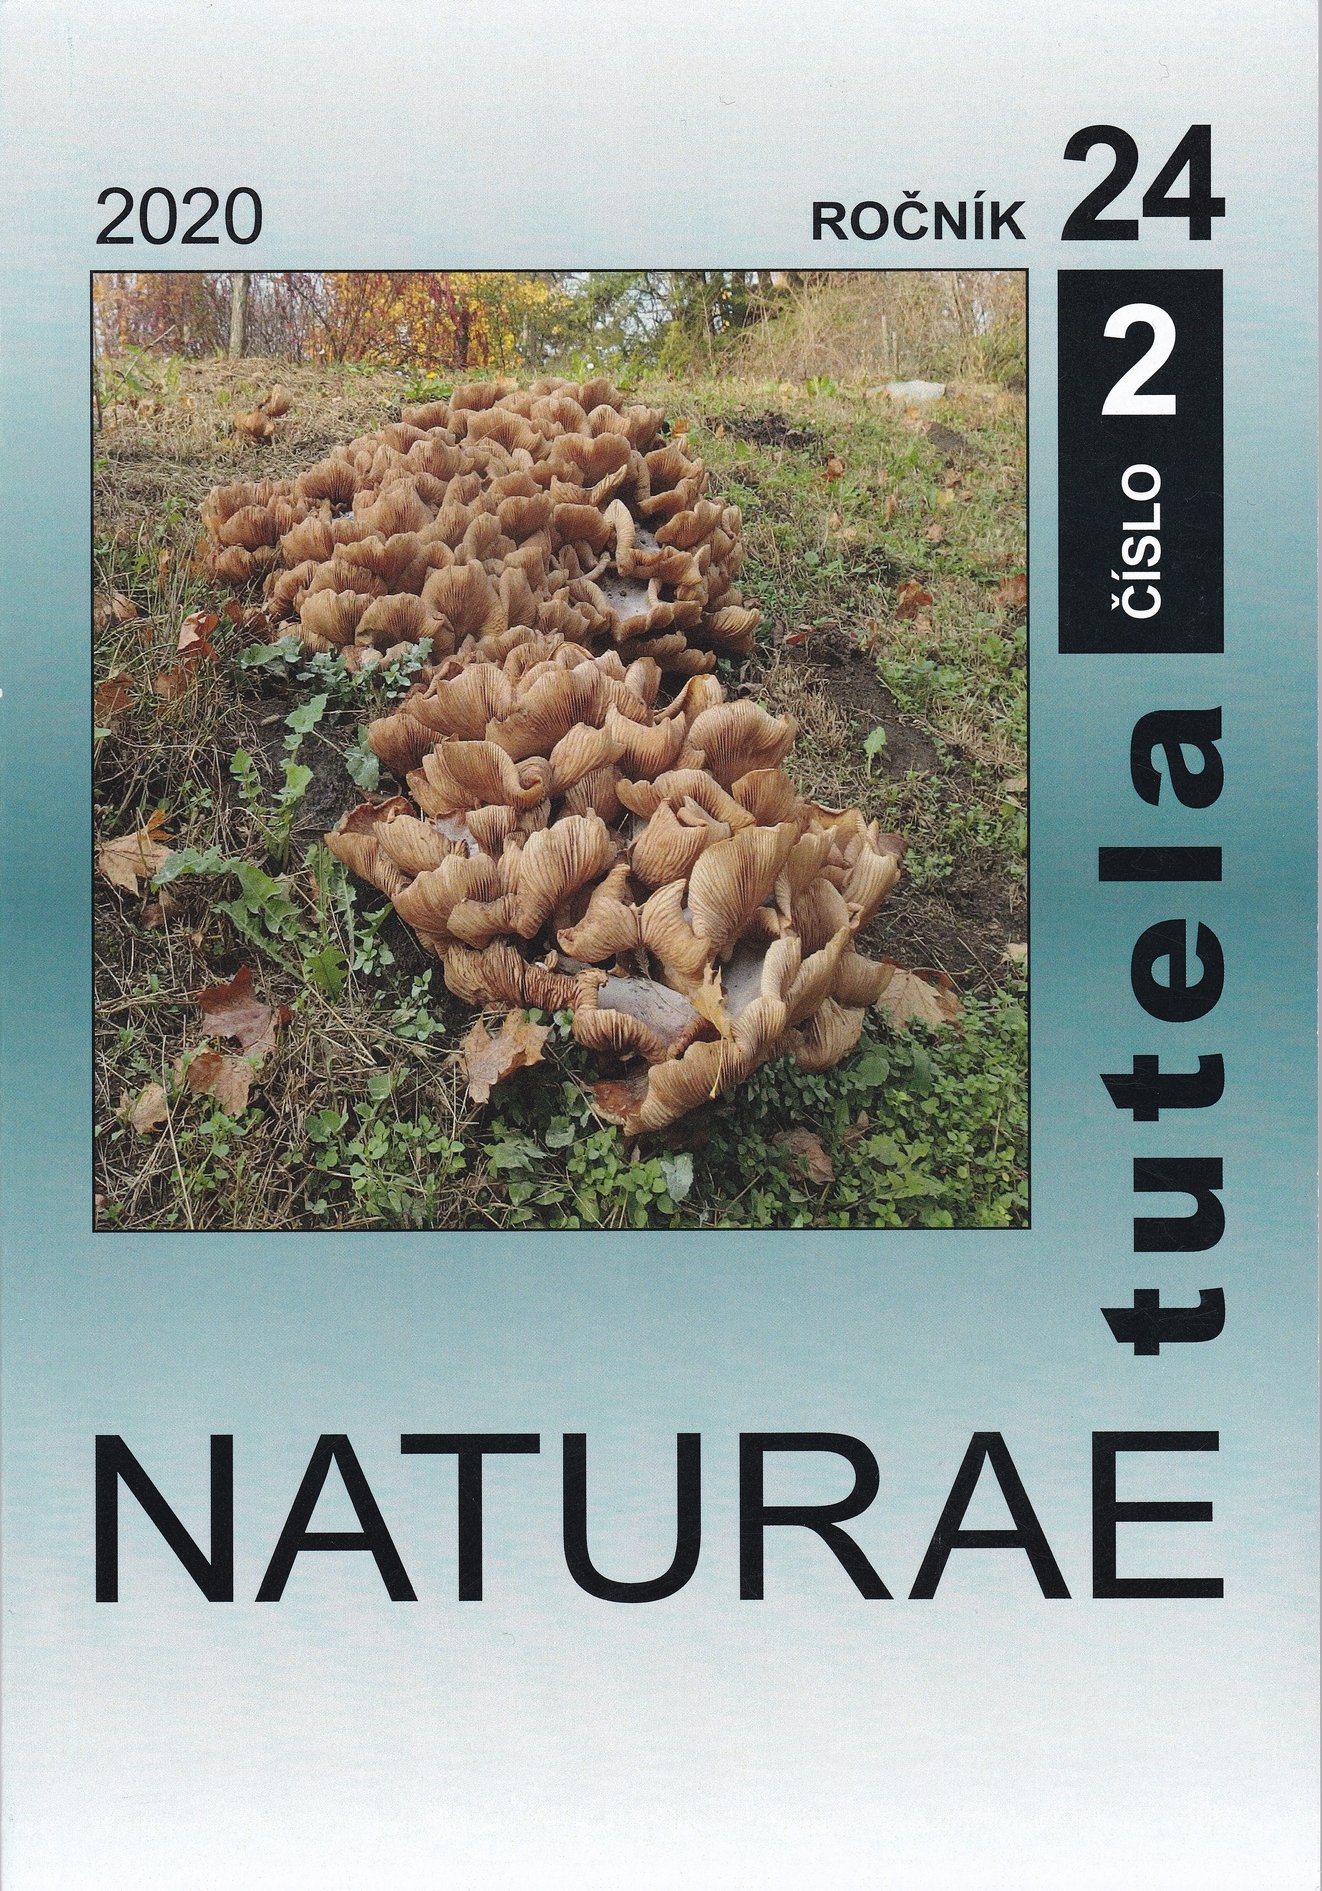 Naturae tutela 2020/24. évf. 2. sz (Rippl-Rónai Múzeum CC BY-NC-ND)